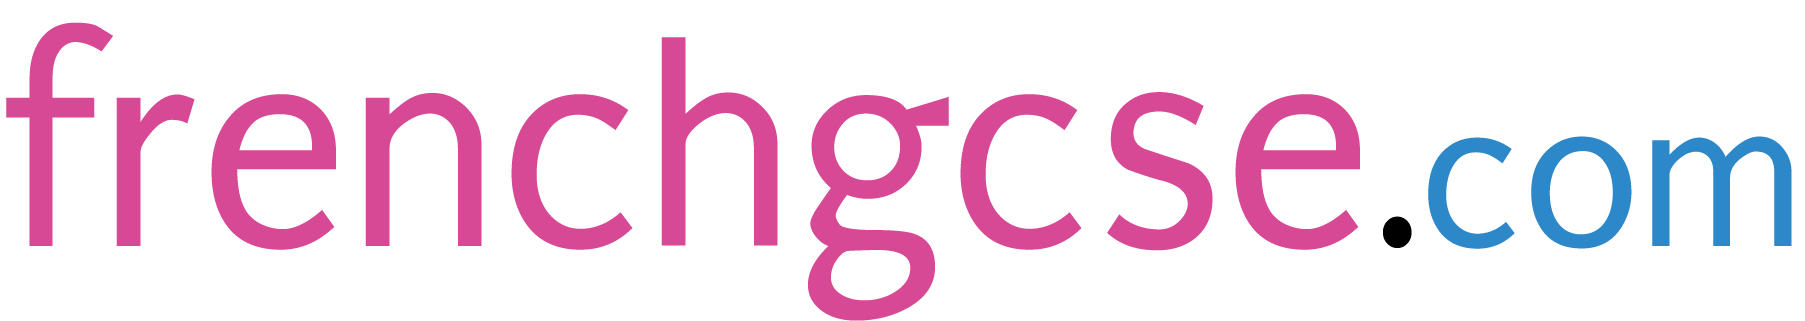 frenchgcsecom logo